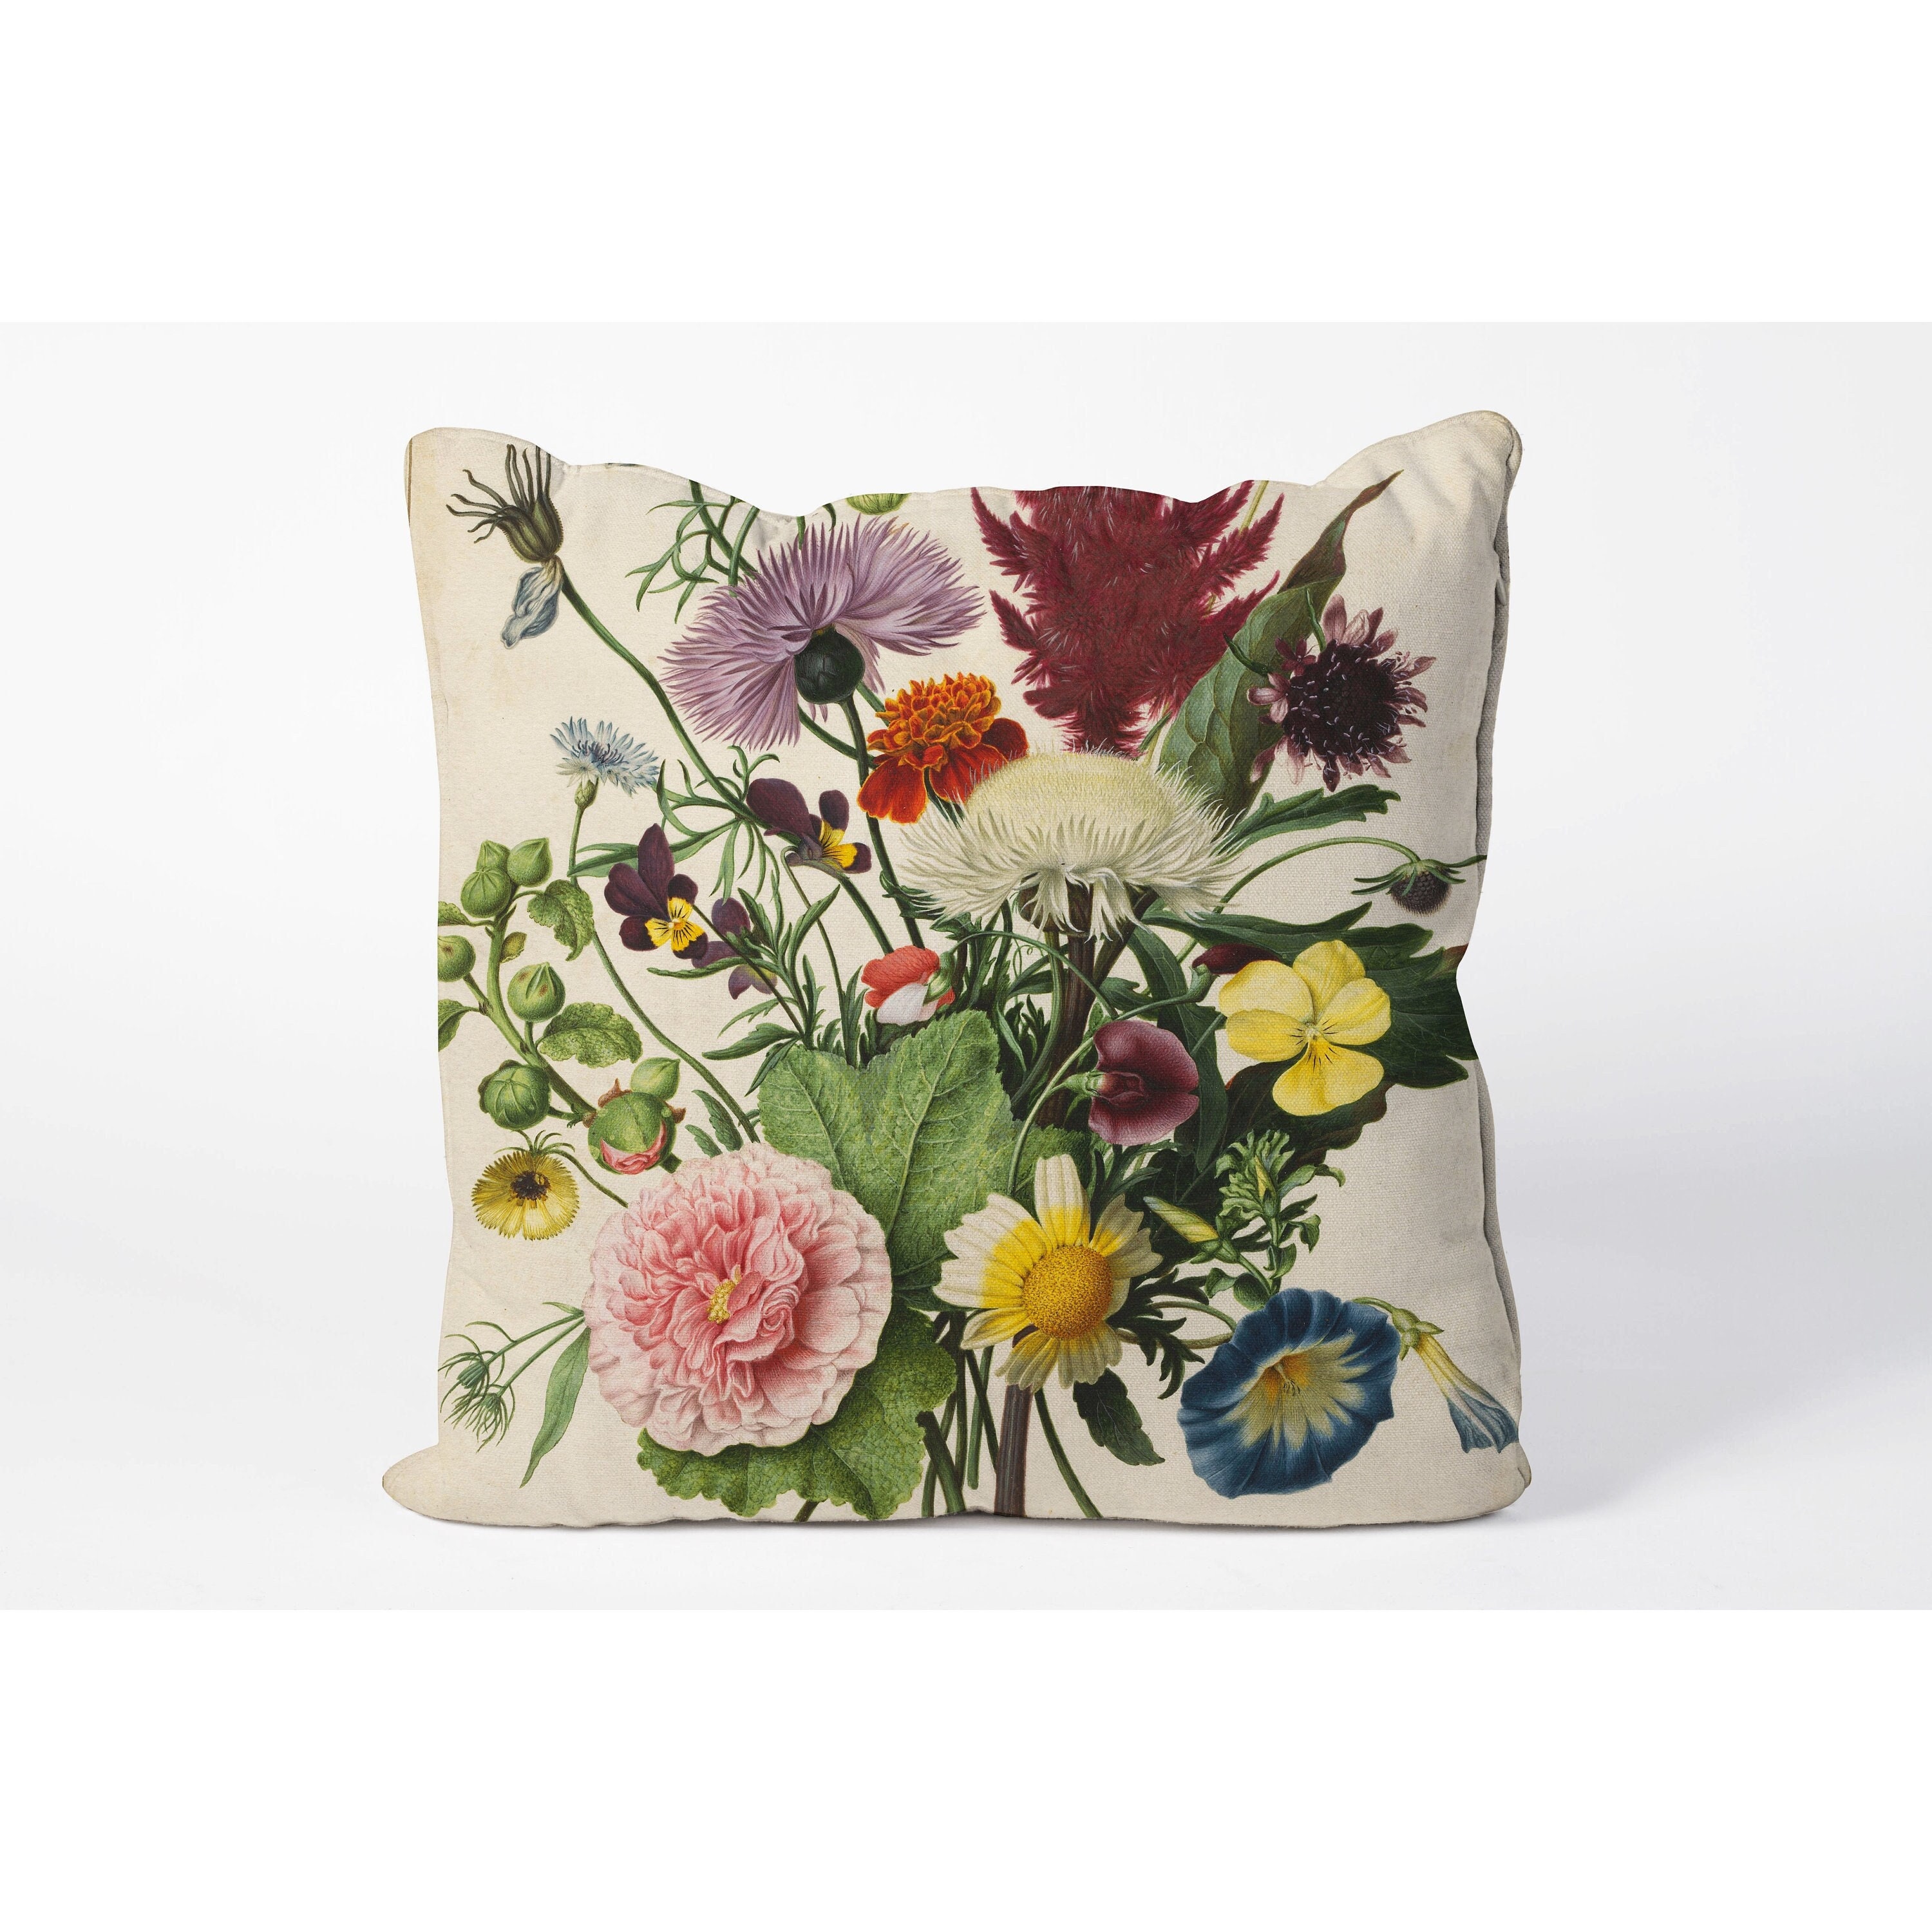 Frida Kahlo Plant Floral Leaves Cotton Cushion Cover Home Decorative Pillow Case 